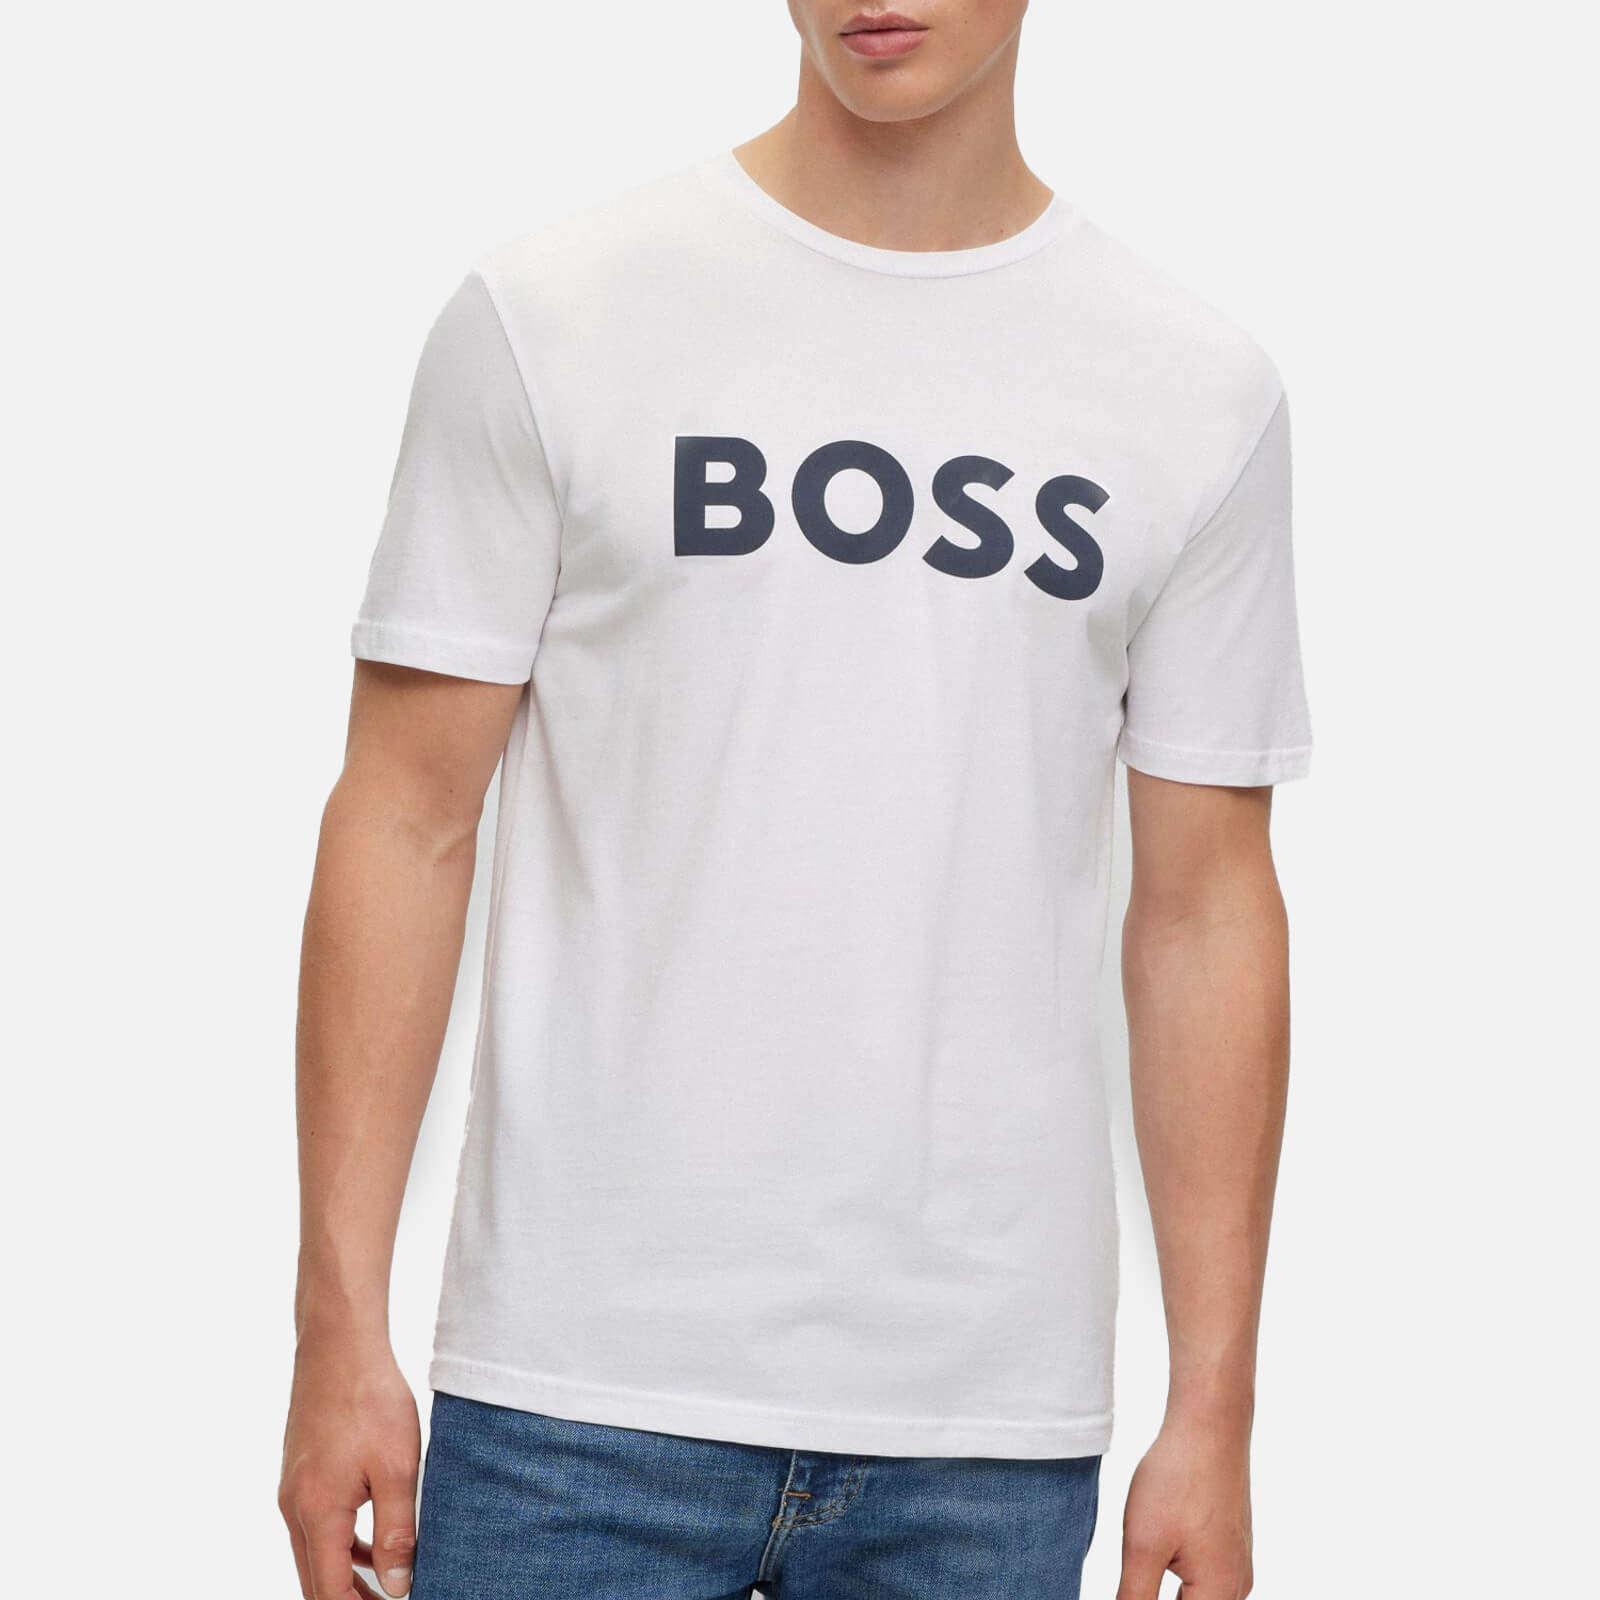 BOSS Orange Men's Thinking Cotton-Jersey T-Shirt